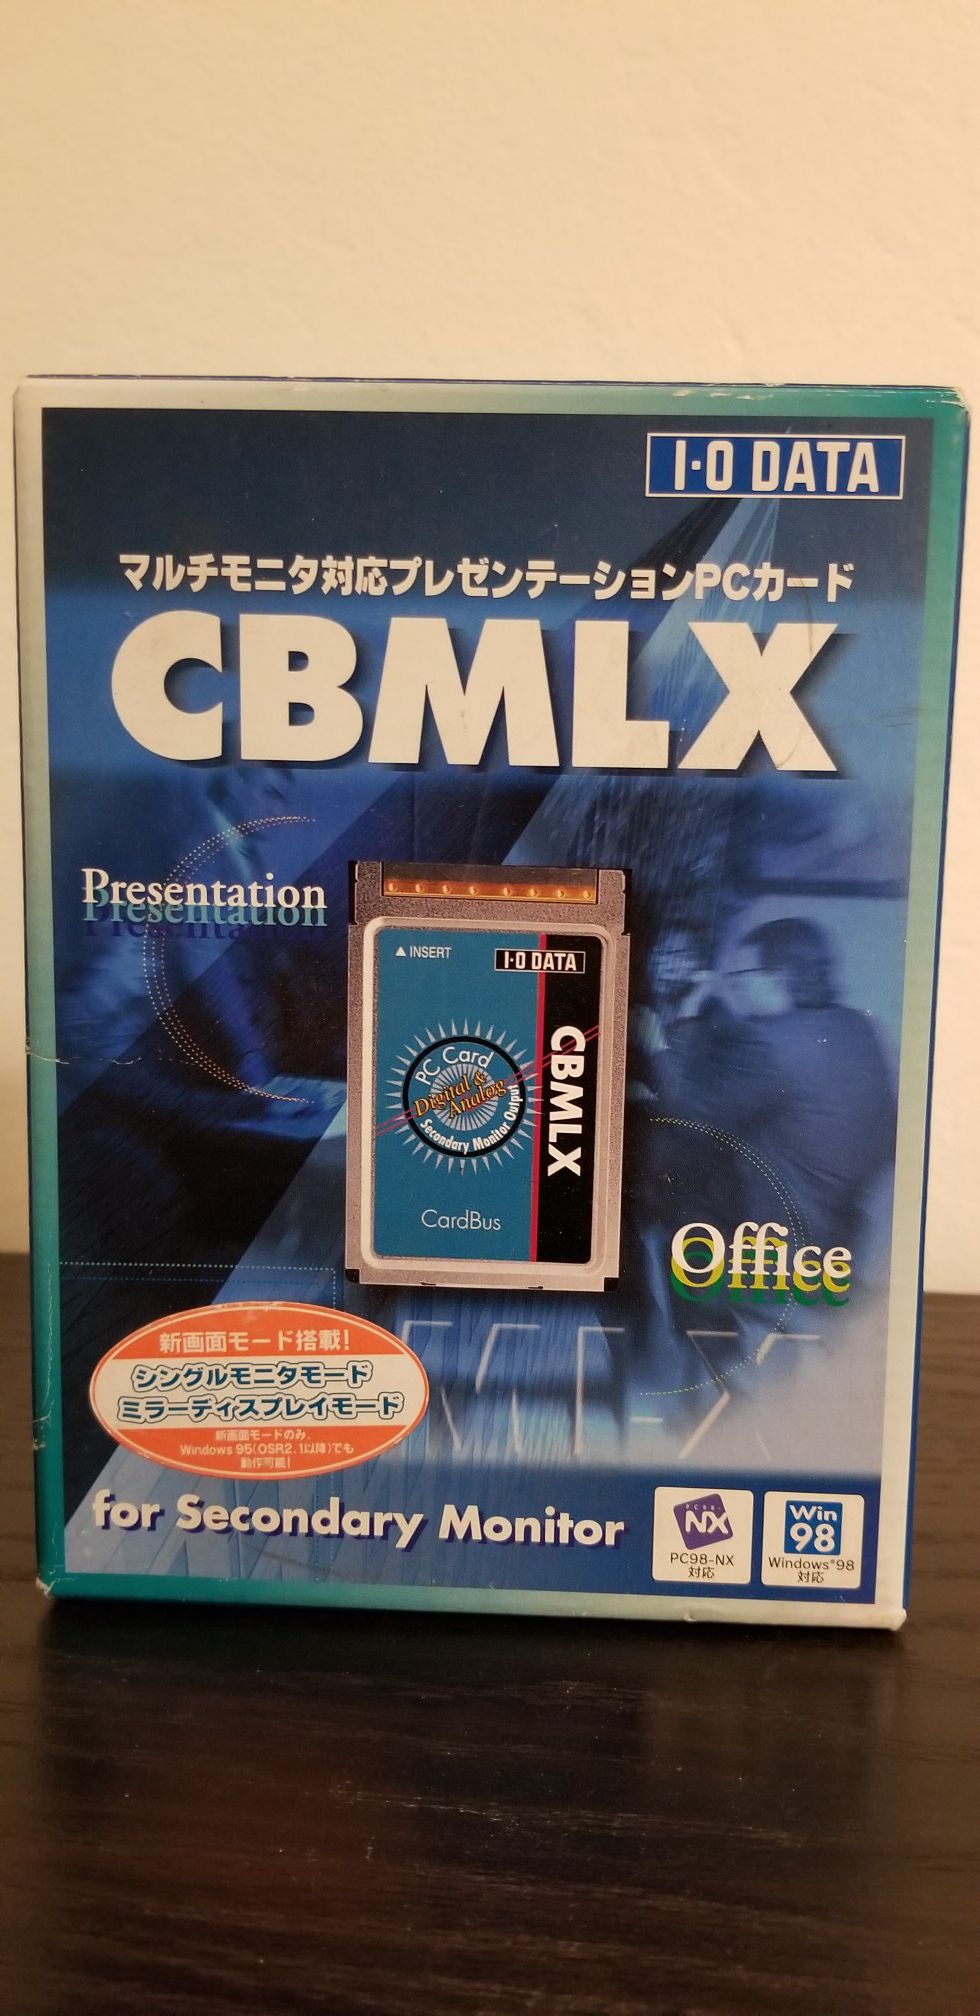 CBMLX Dual Monitor PC Cardbus for laptops